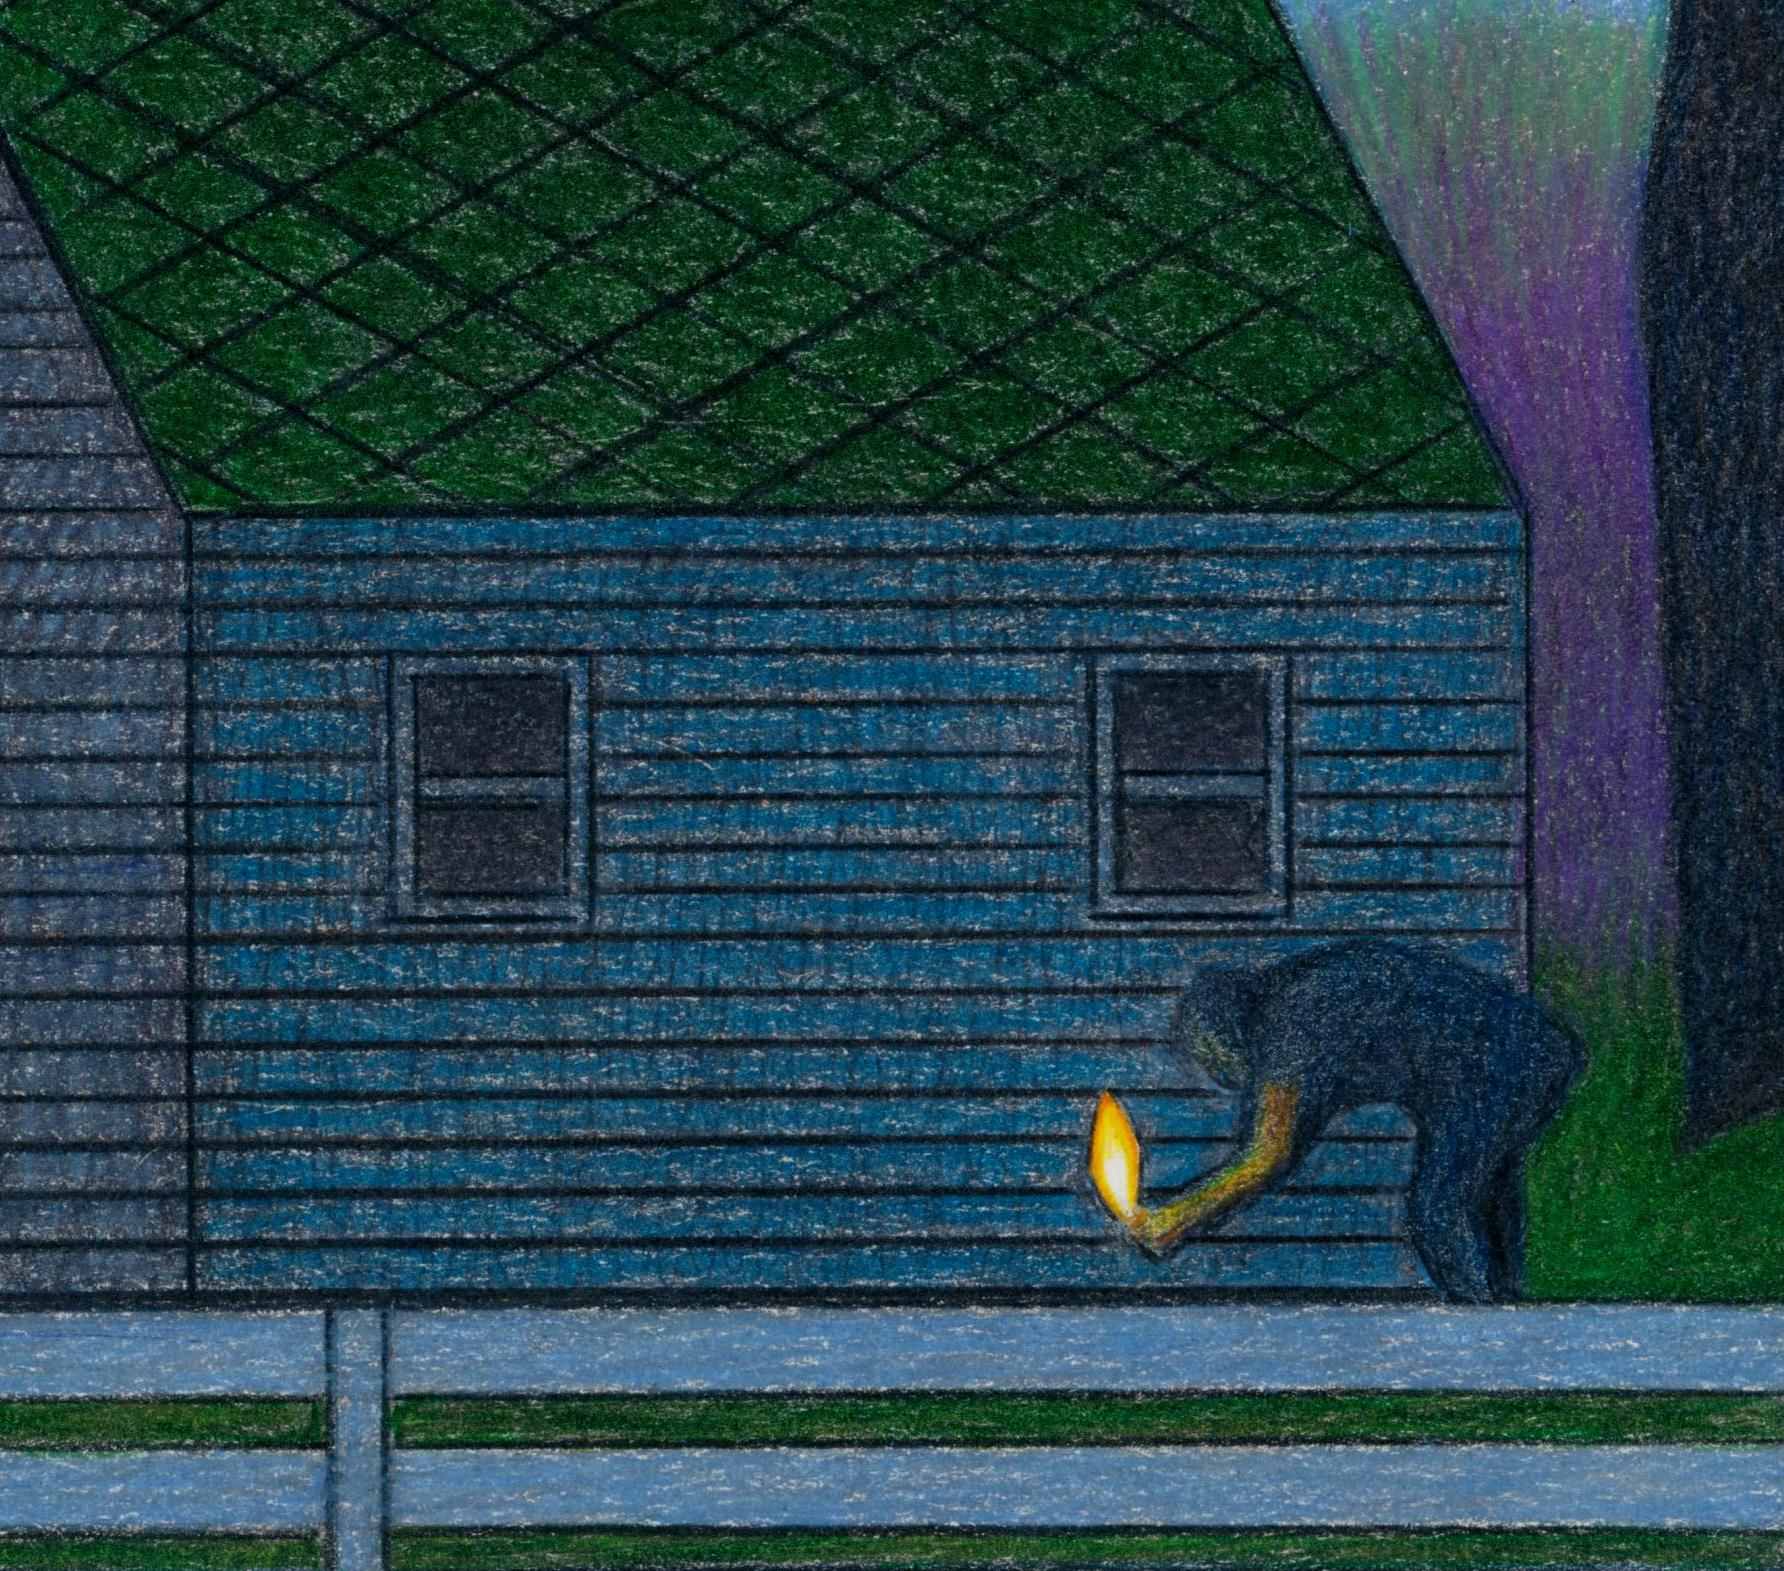 pencil drawing of night scene